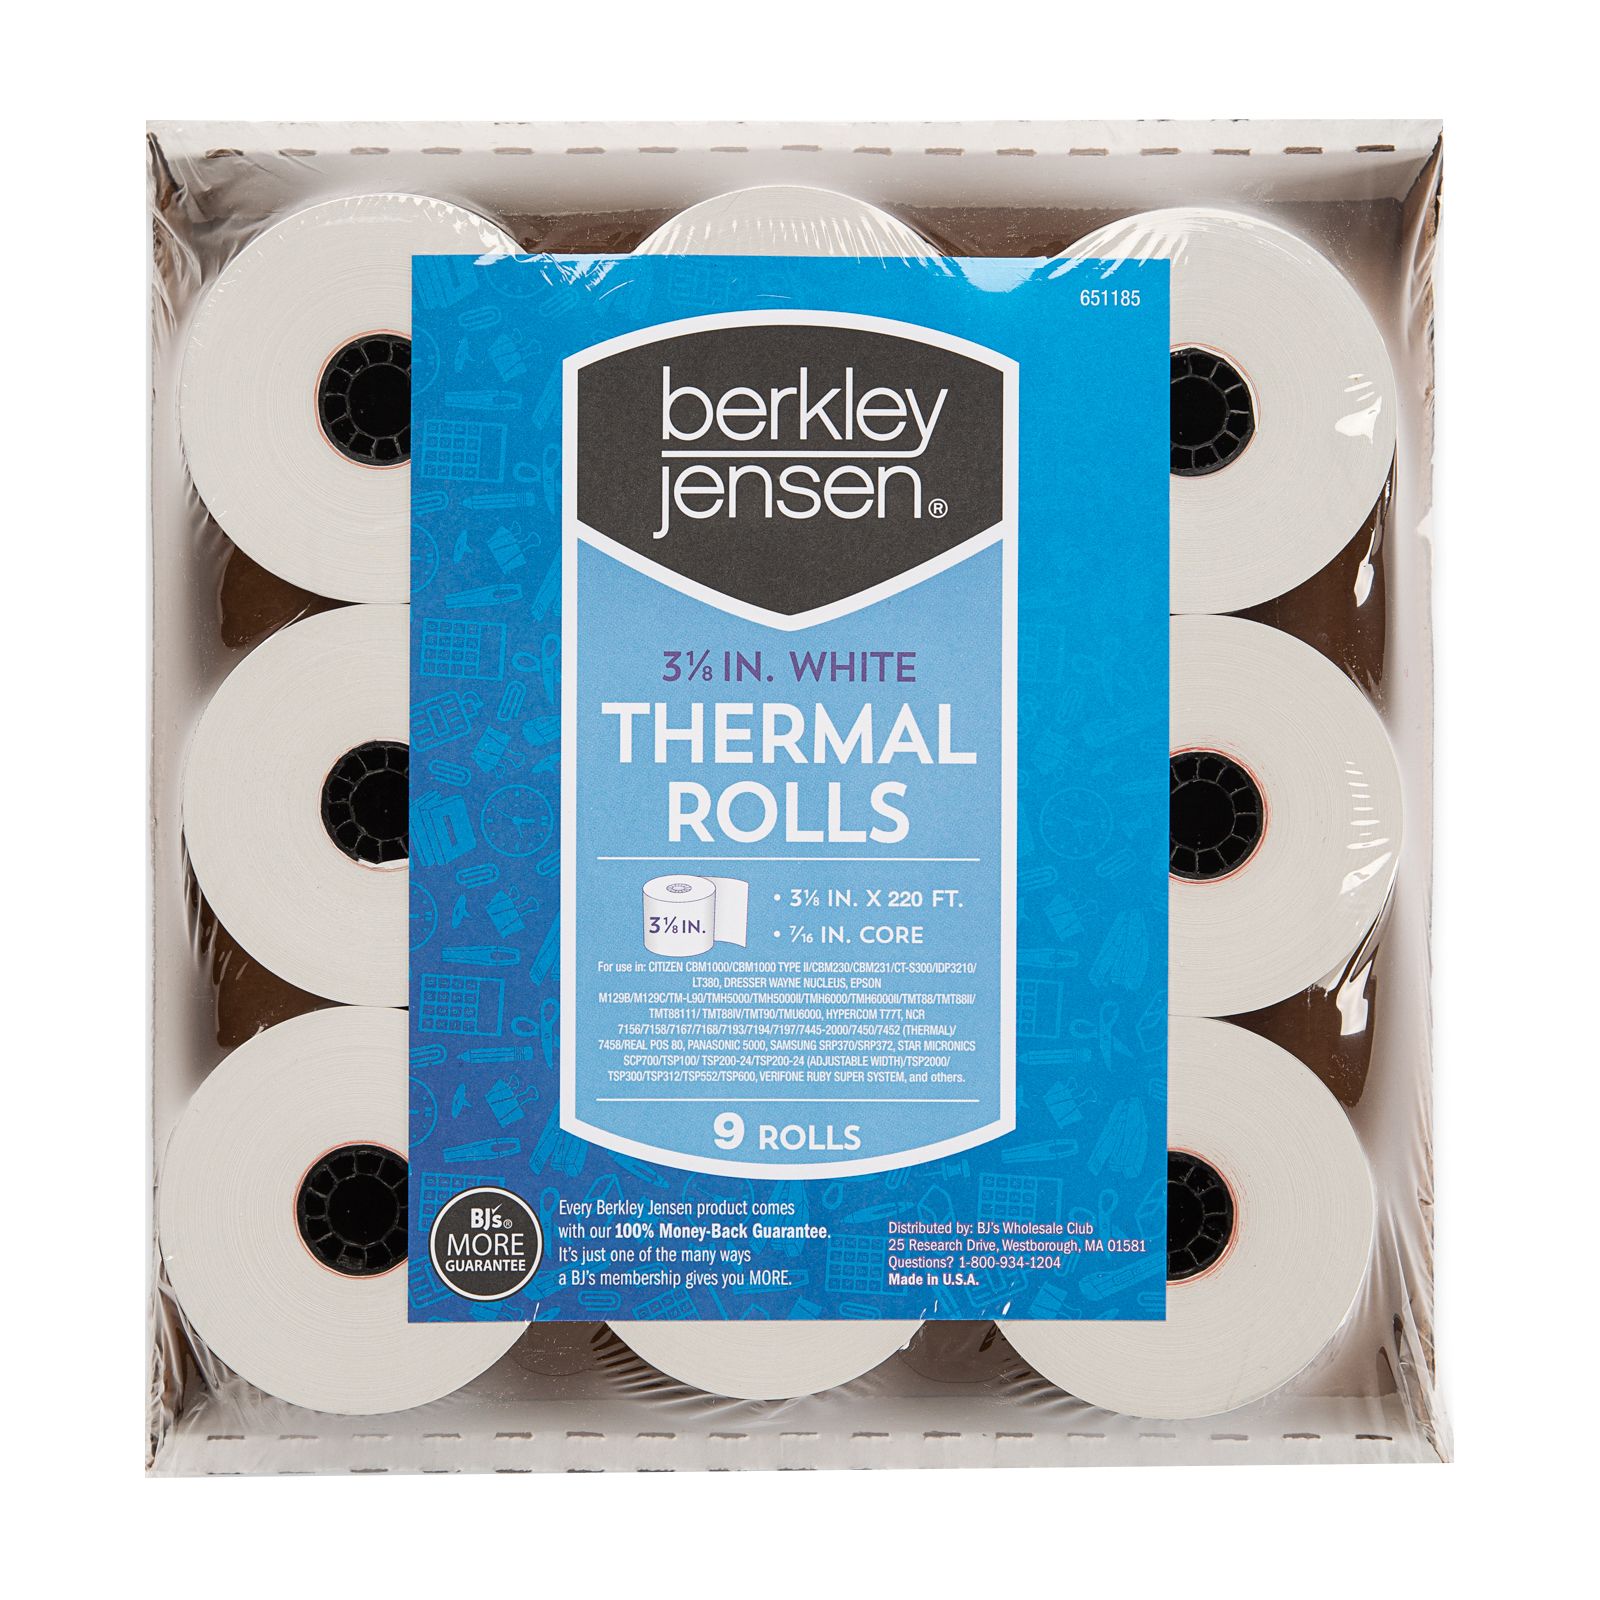 Berkley Jensen Thermal Paper Rolls 9 Pk Bjs Wholesale Club